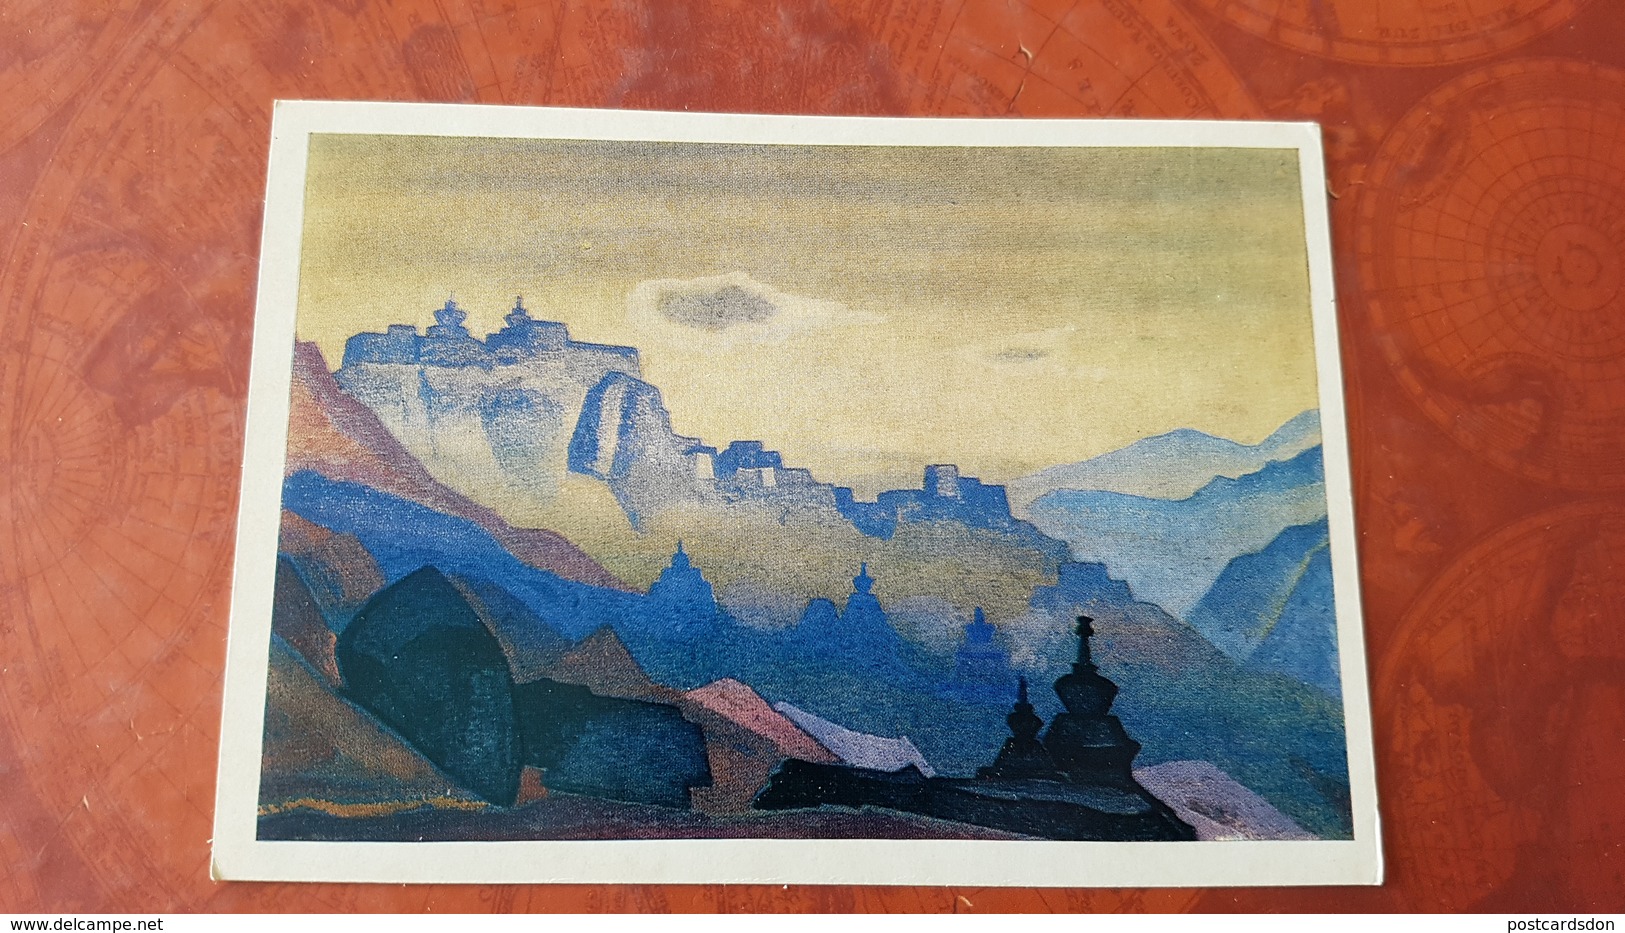 Nicholas Roerich - "Ladak" -  HIMALAYA - Tibet -  - Old USSR PC 1974 - Tíbet